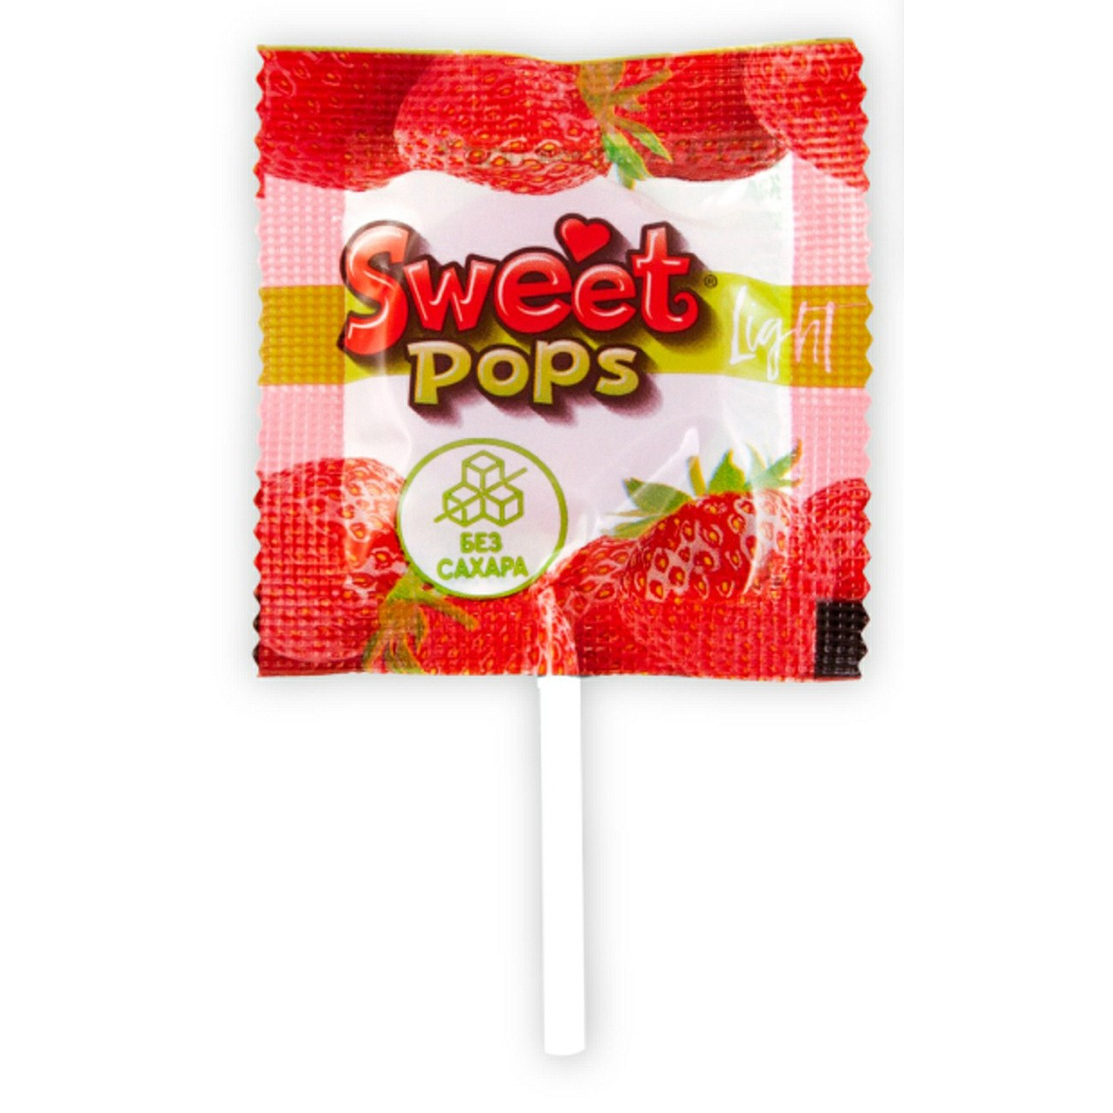 Карамель Sweet pops light без сахара 10 г в ассортименте карамель sweet pops зебра в клеточку круглая на палочке 10 г